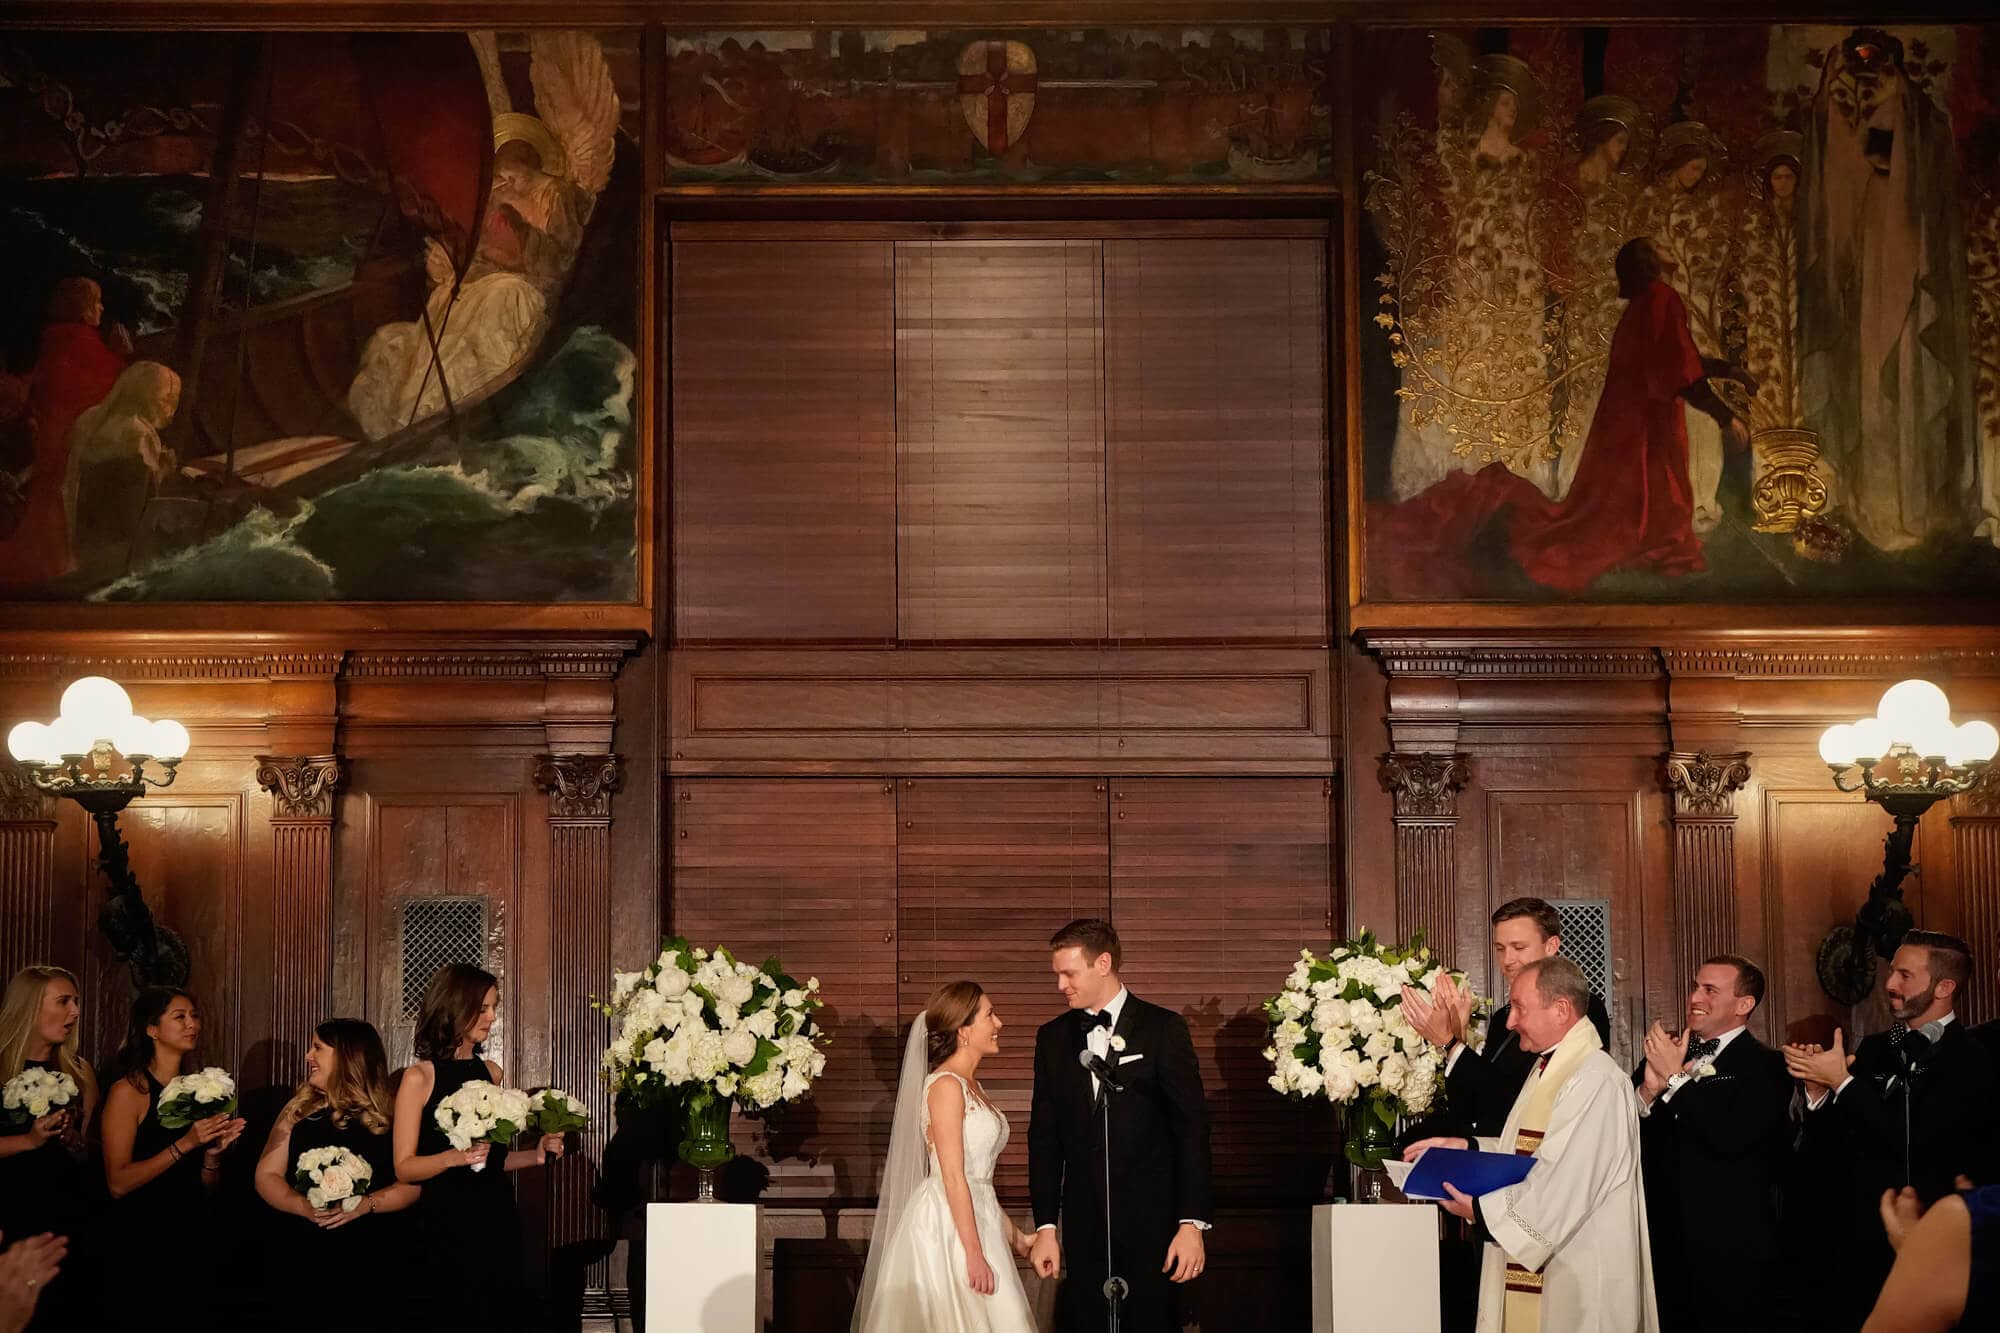 abbey room at boston public library wedding ceremony